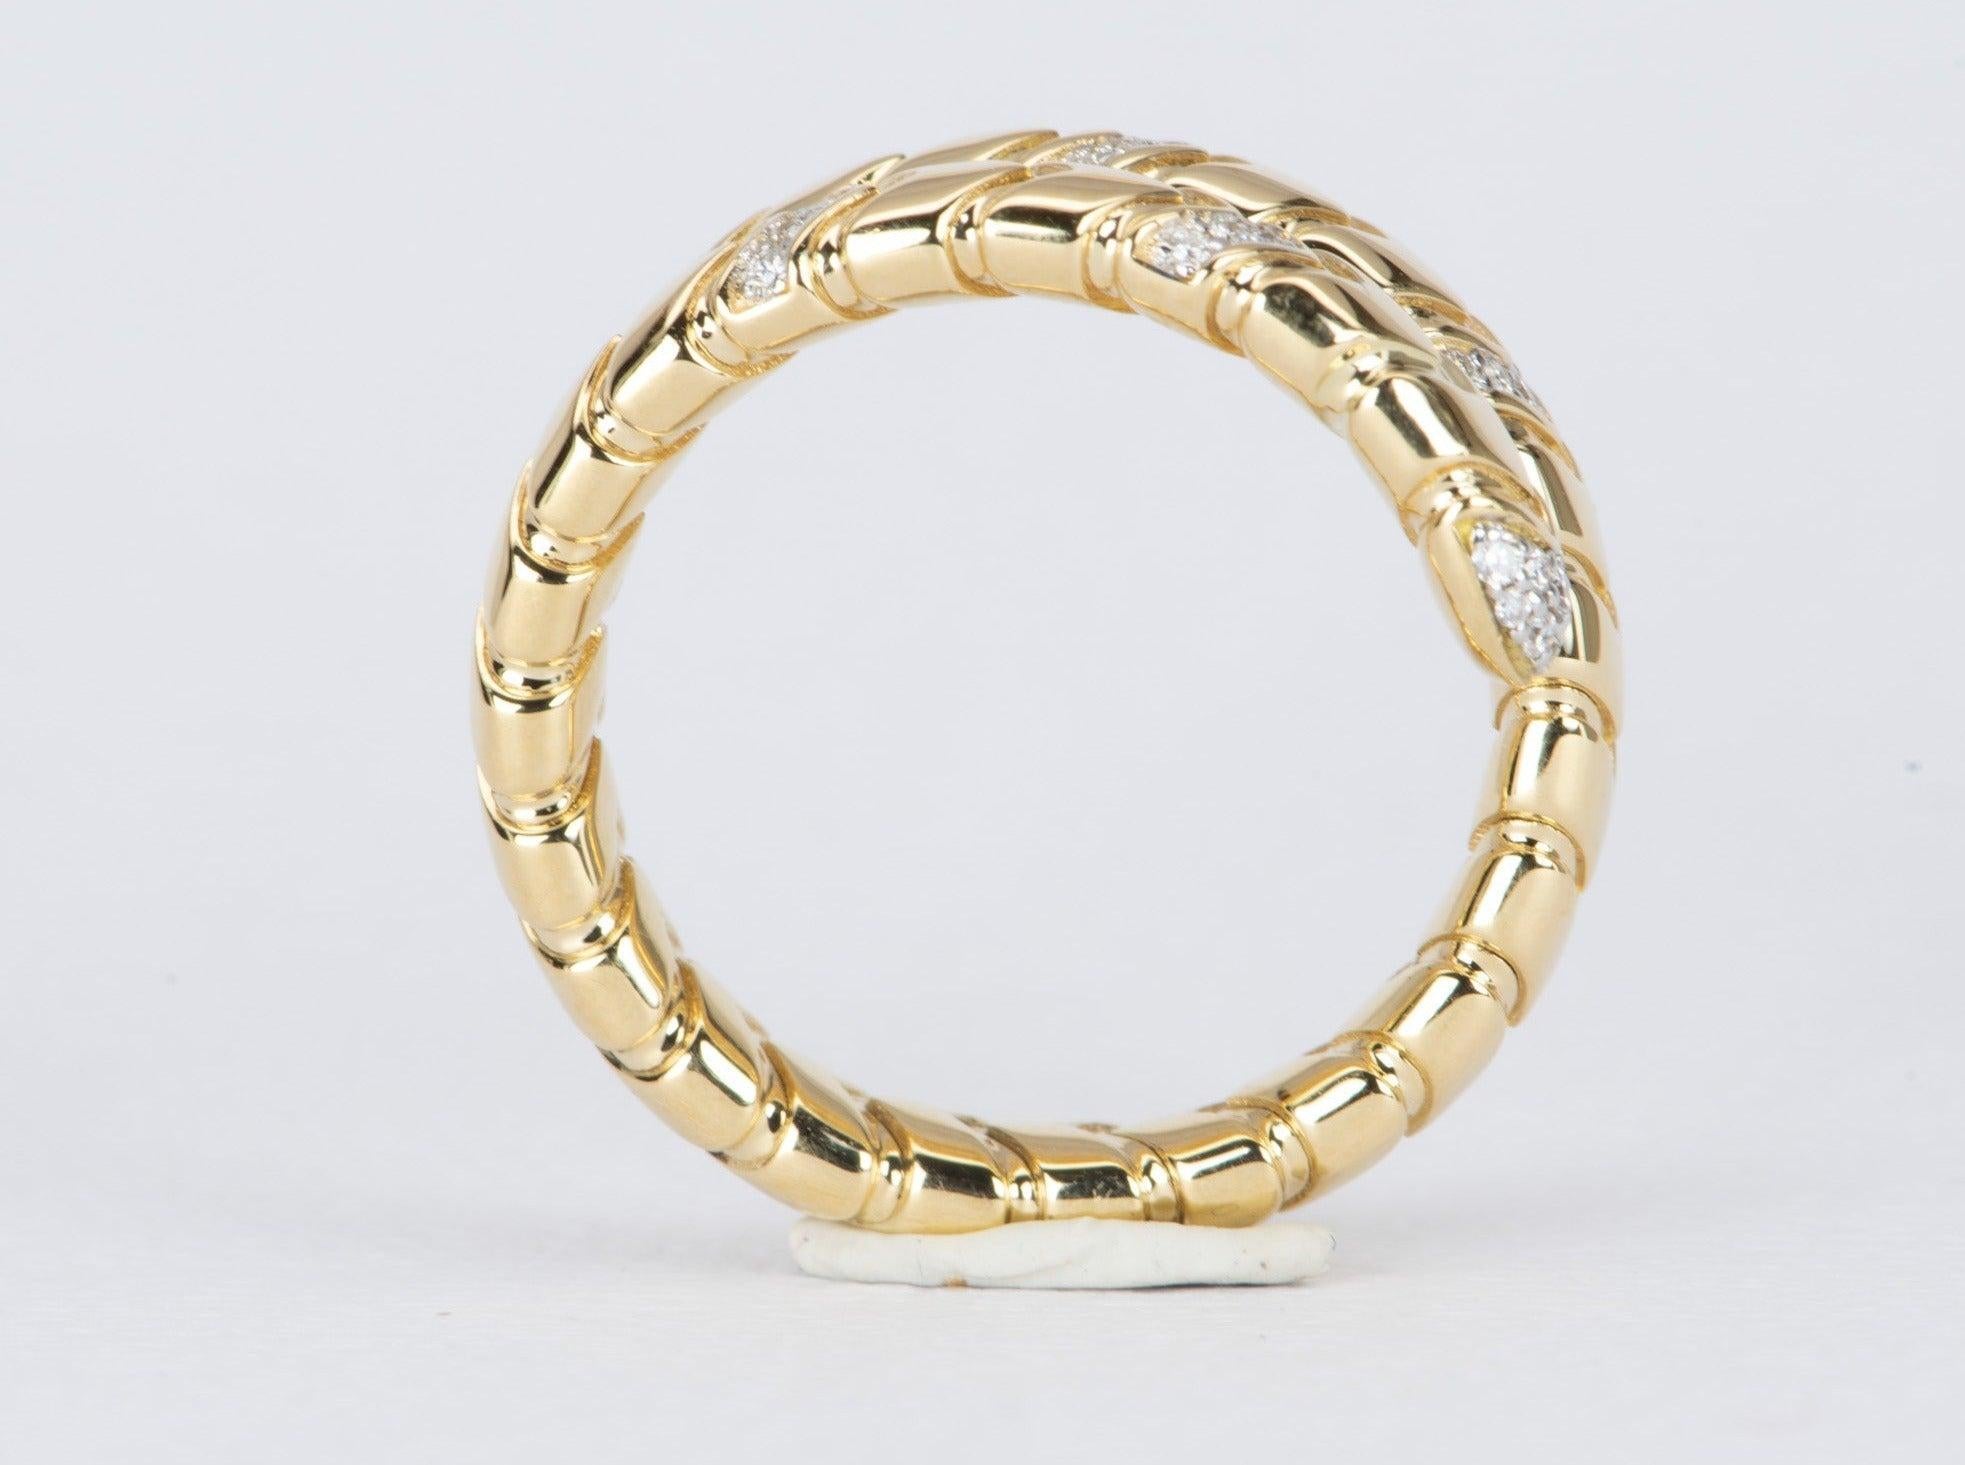 1902 gold ring 18k